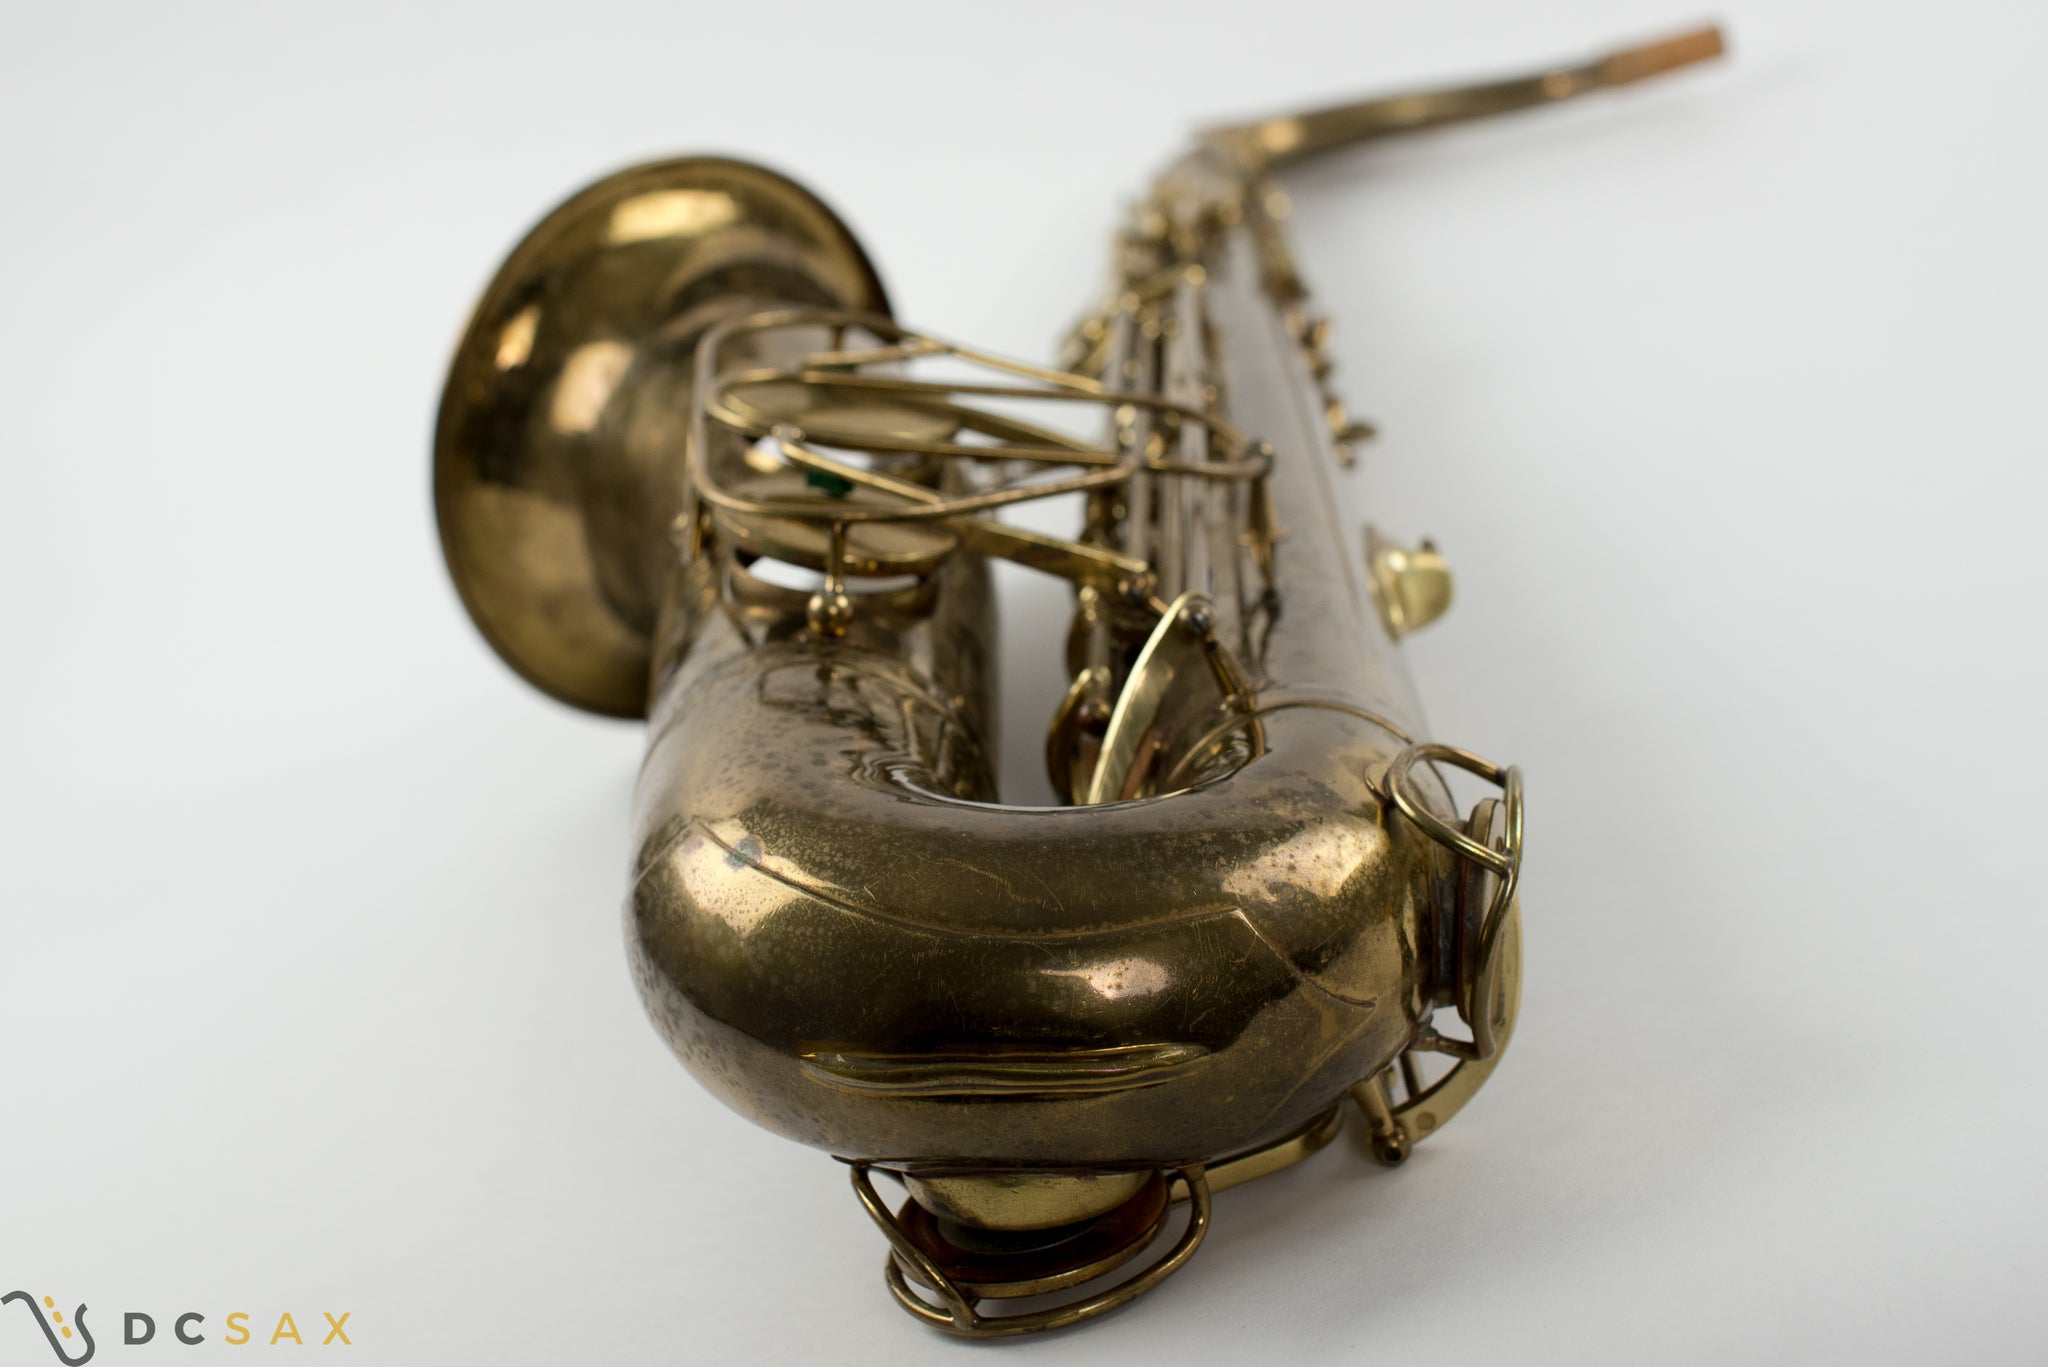 1948 Martin Committee Tenor Saxophone, "The Martin"